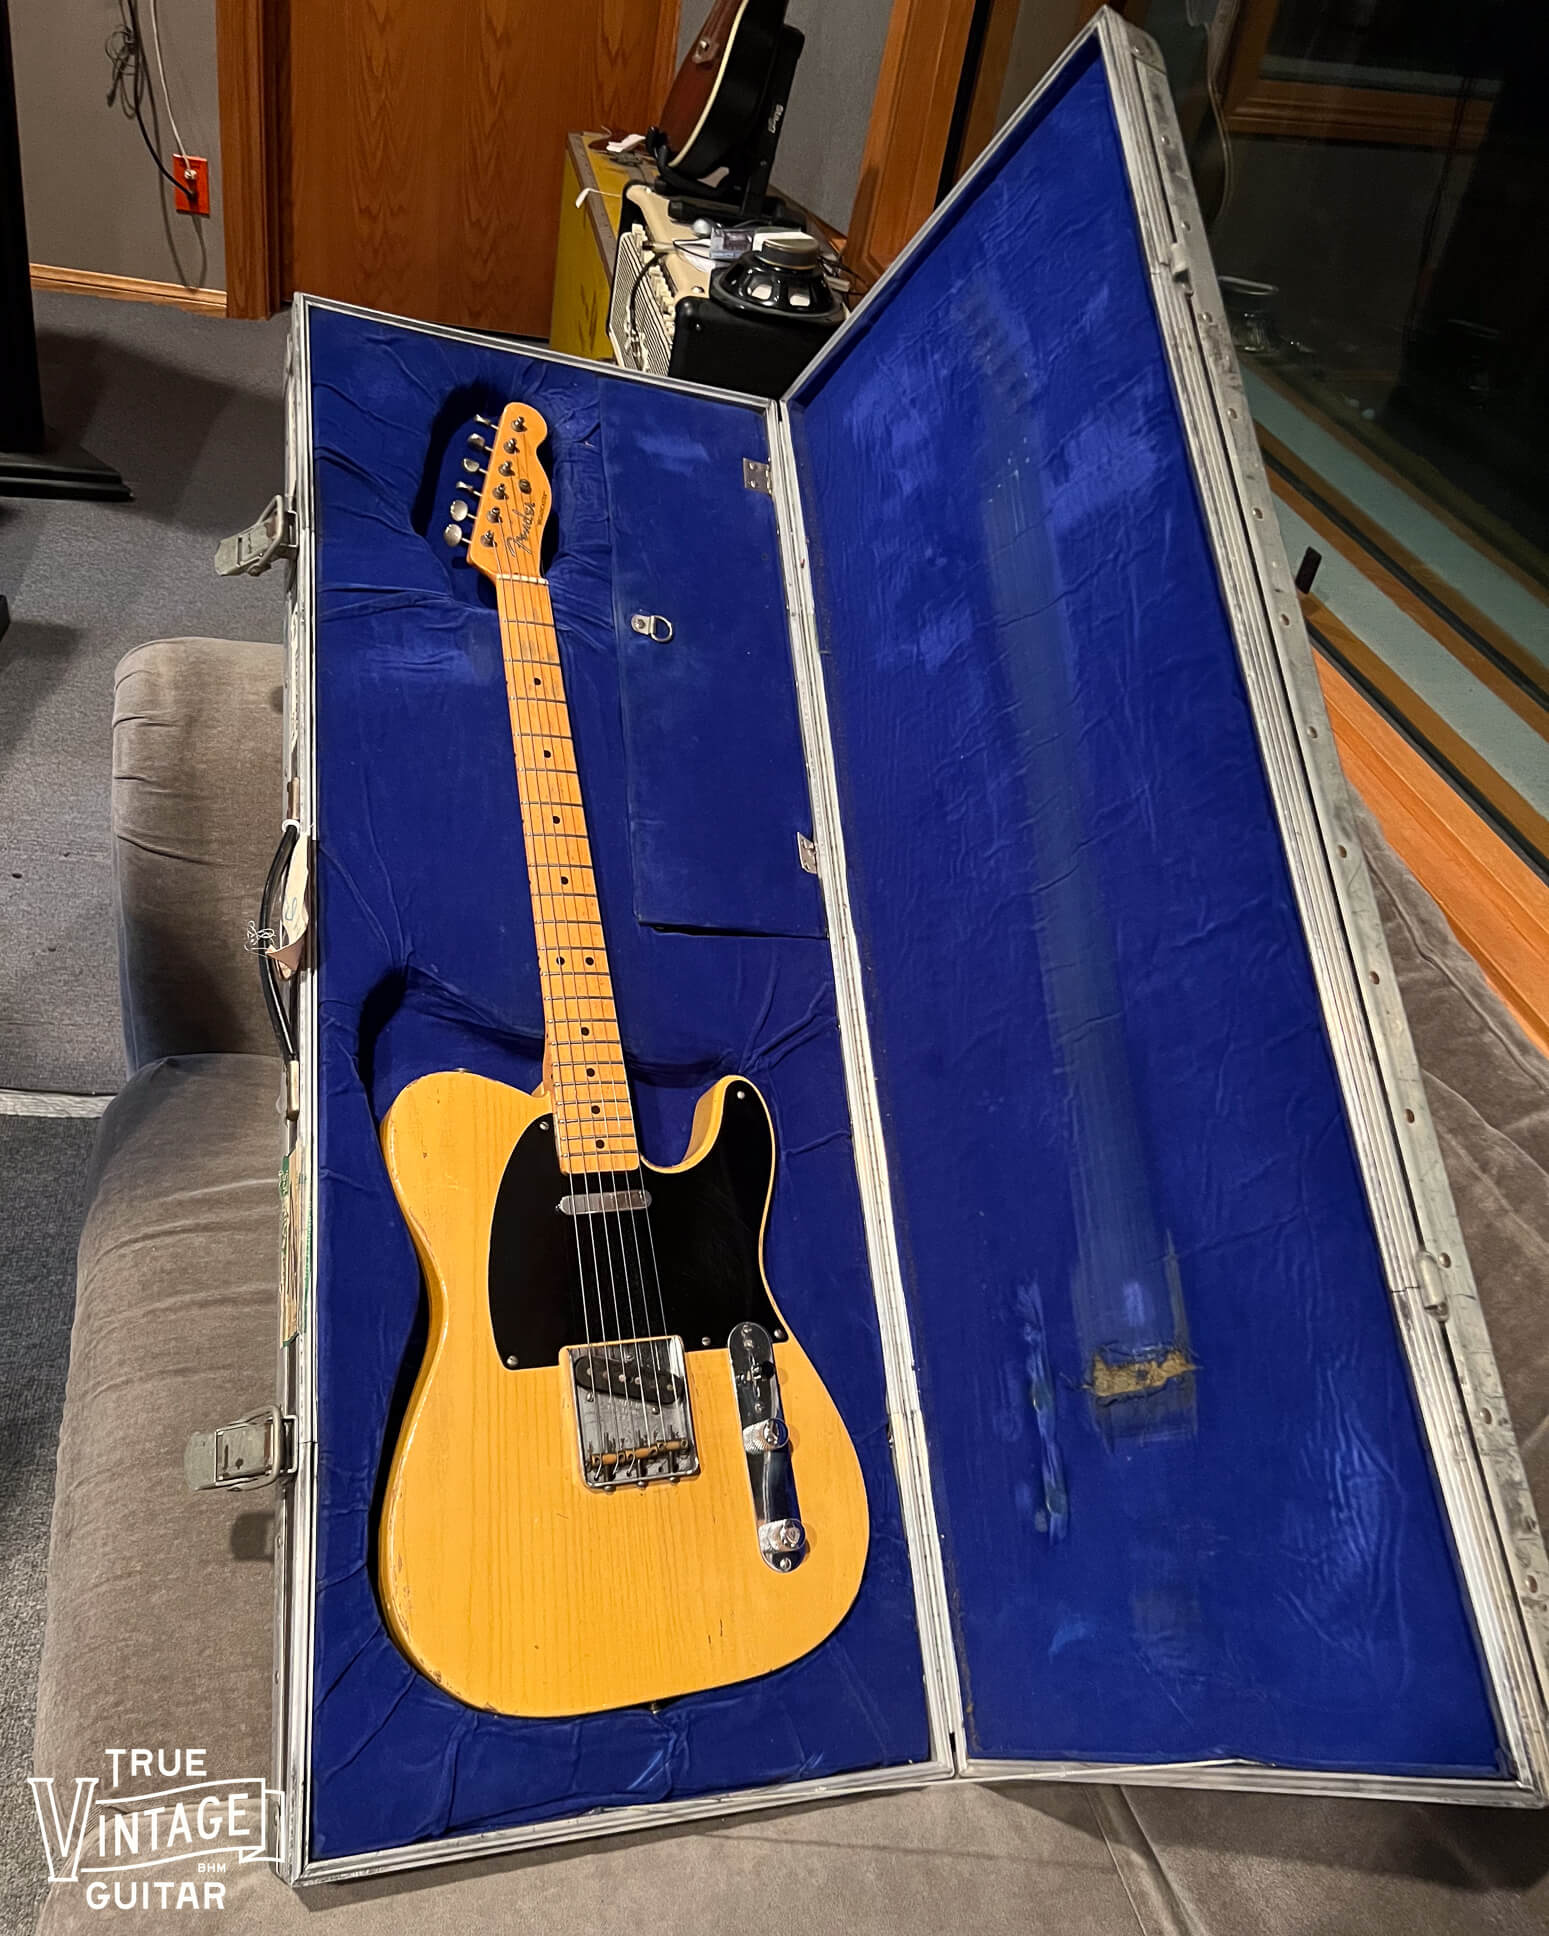 1950 original Broadcaster guitar with yellow finish, black pickguard